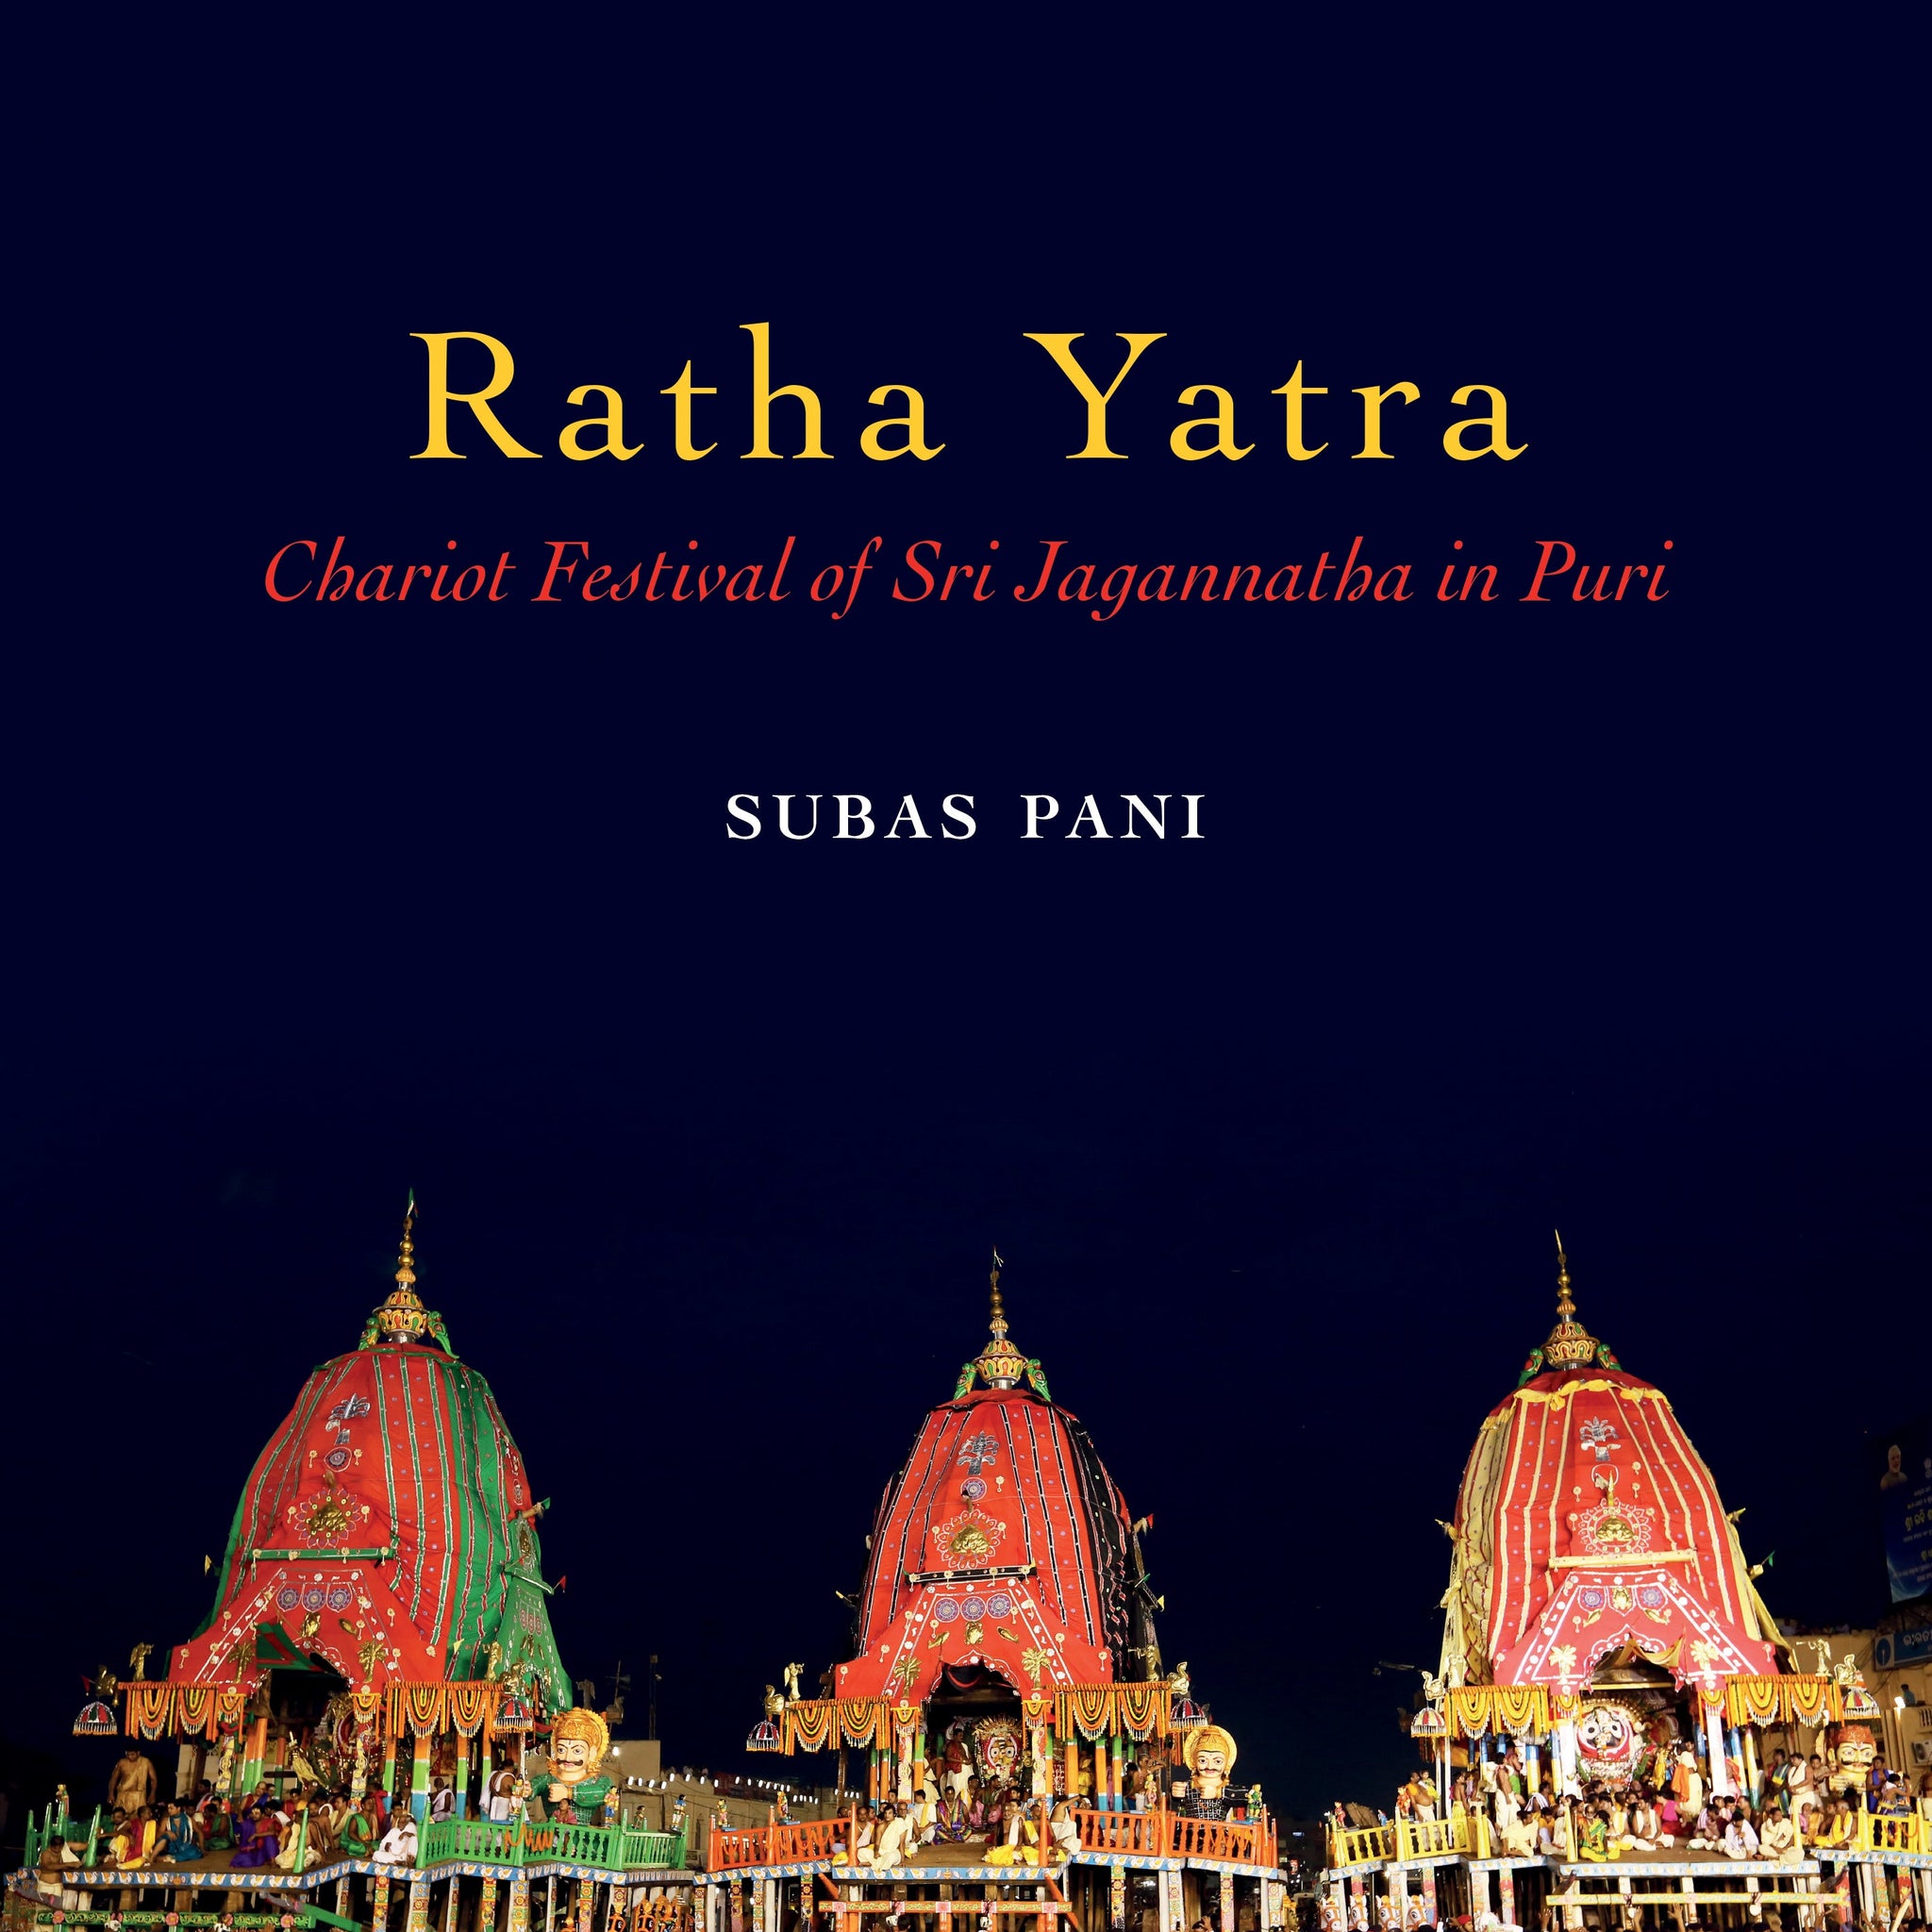 Ratha Yatra: Chariot Festival of Sri Jagannatha in Puri